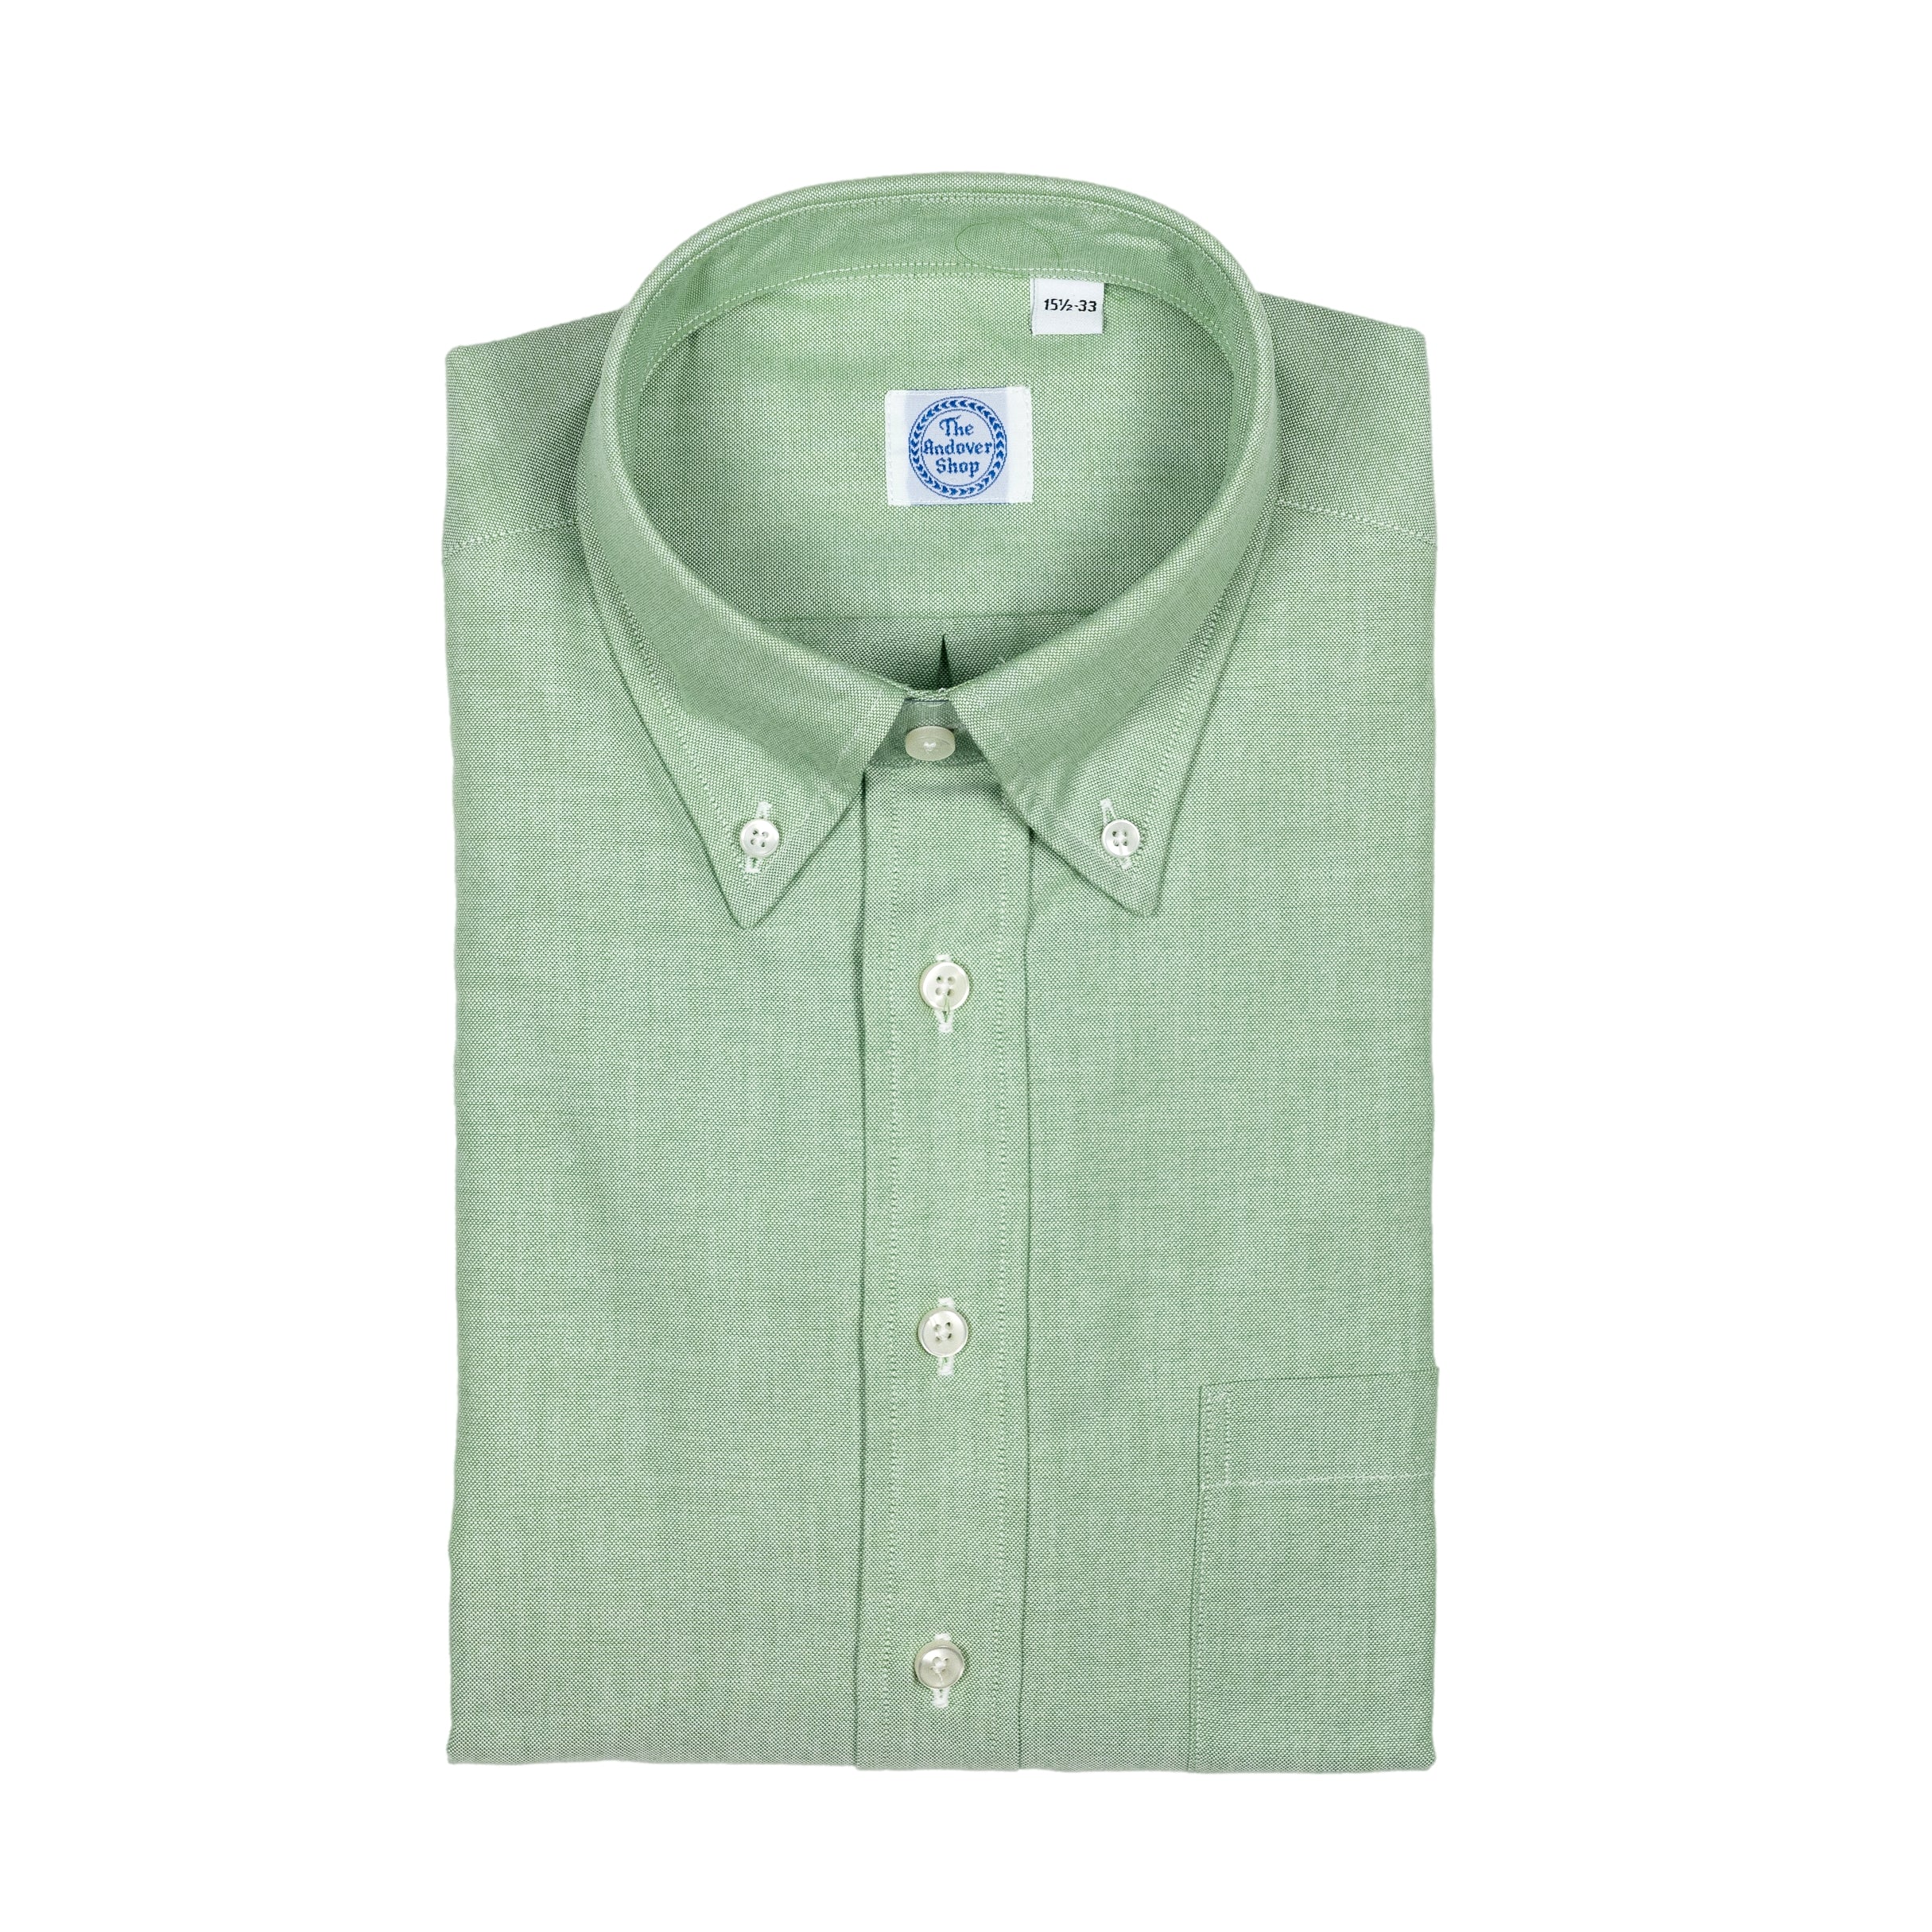 Green Oxford Button Down Dress Shirt